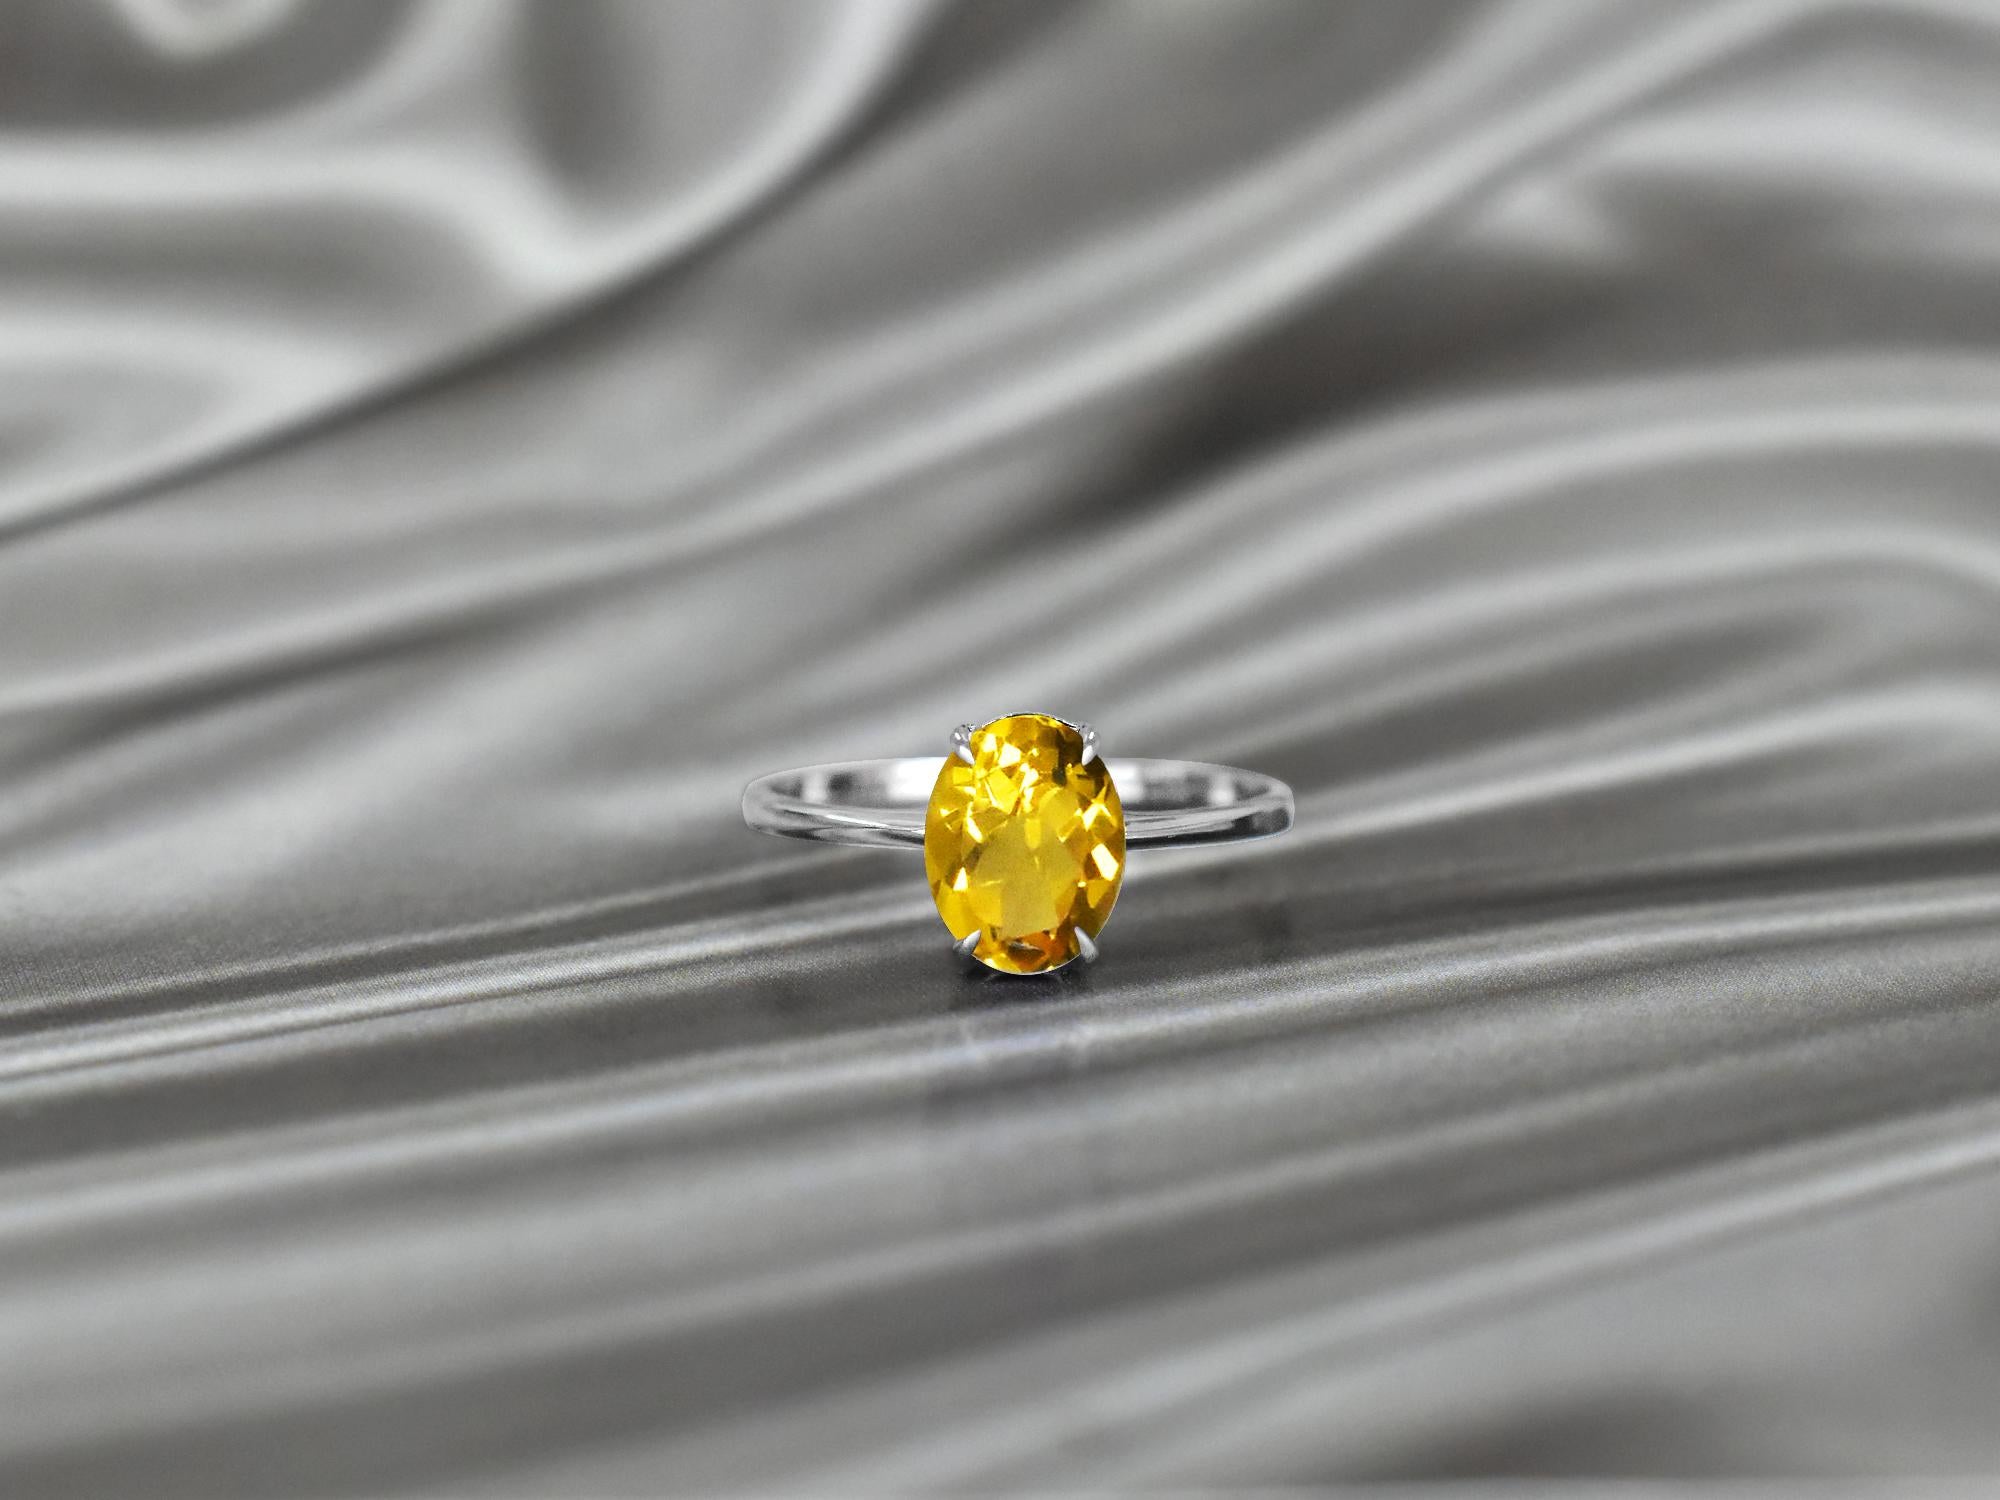 For Sale:  10k Gold Oval Gemstone 9x7 mm Oval Cut Gemstone Ring Gemstone Engagement Ring 6